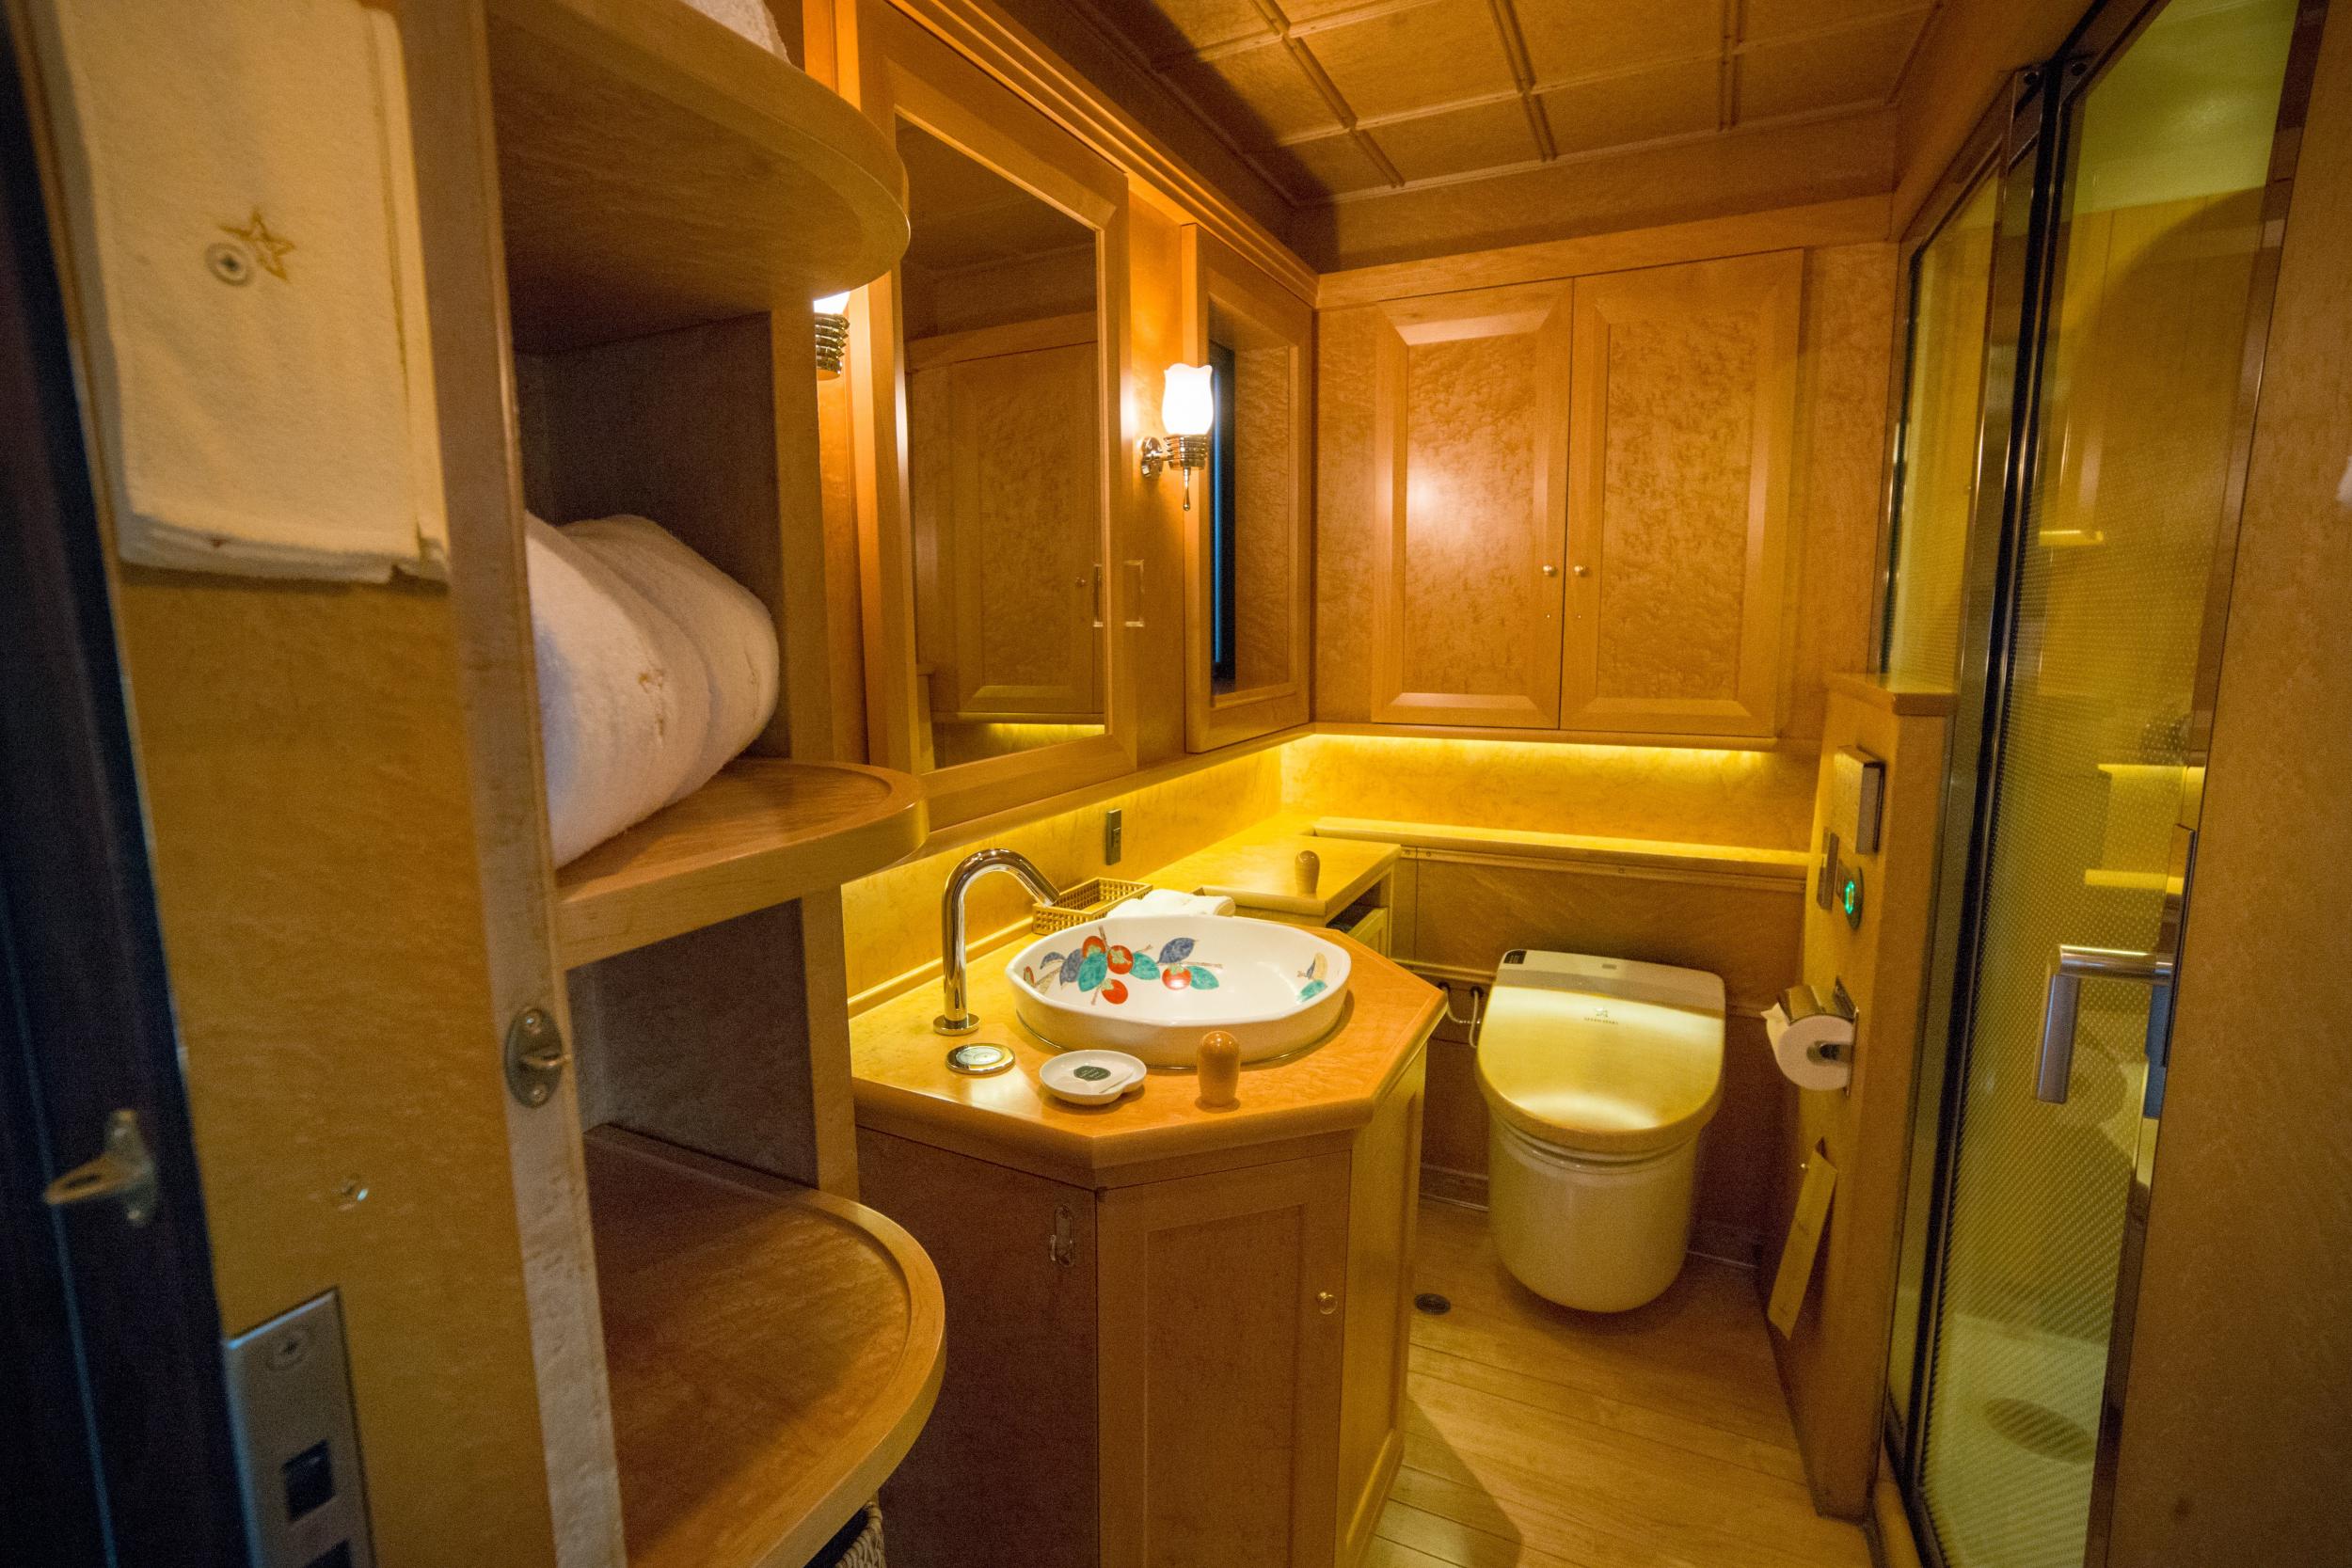 The train’s sauna-like wood-pannelled bathroom